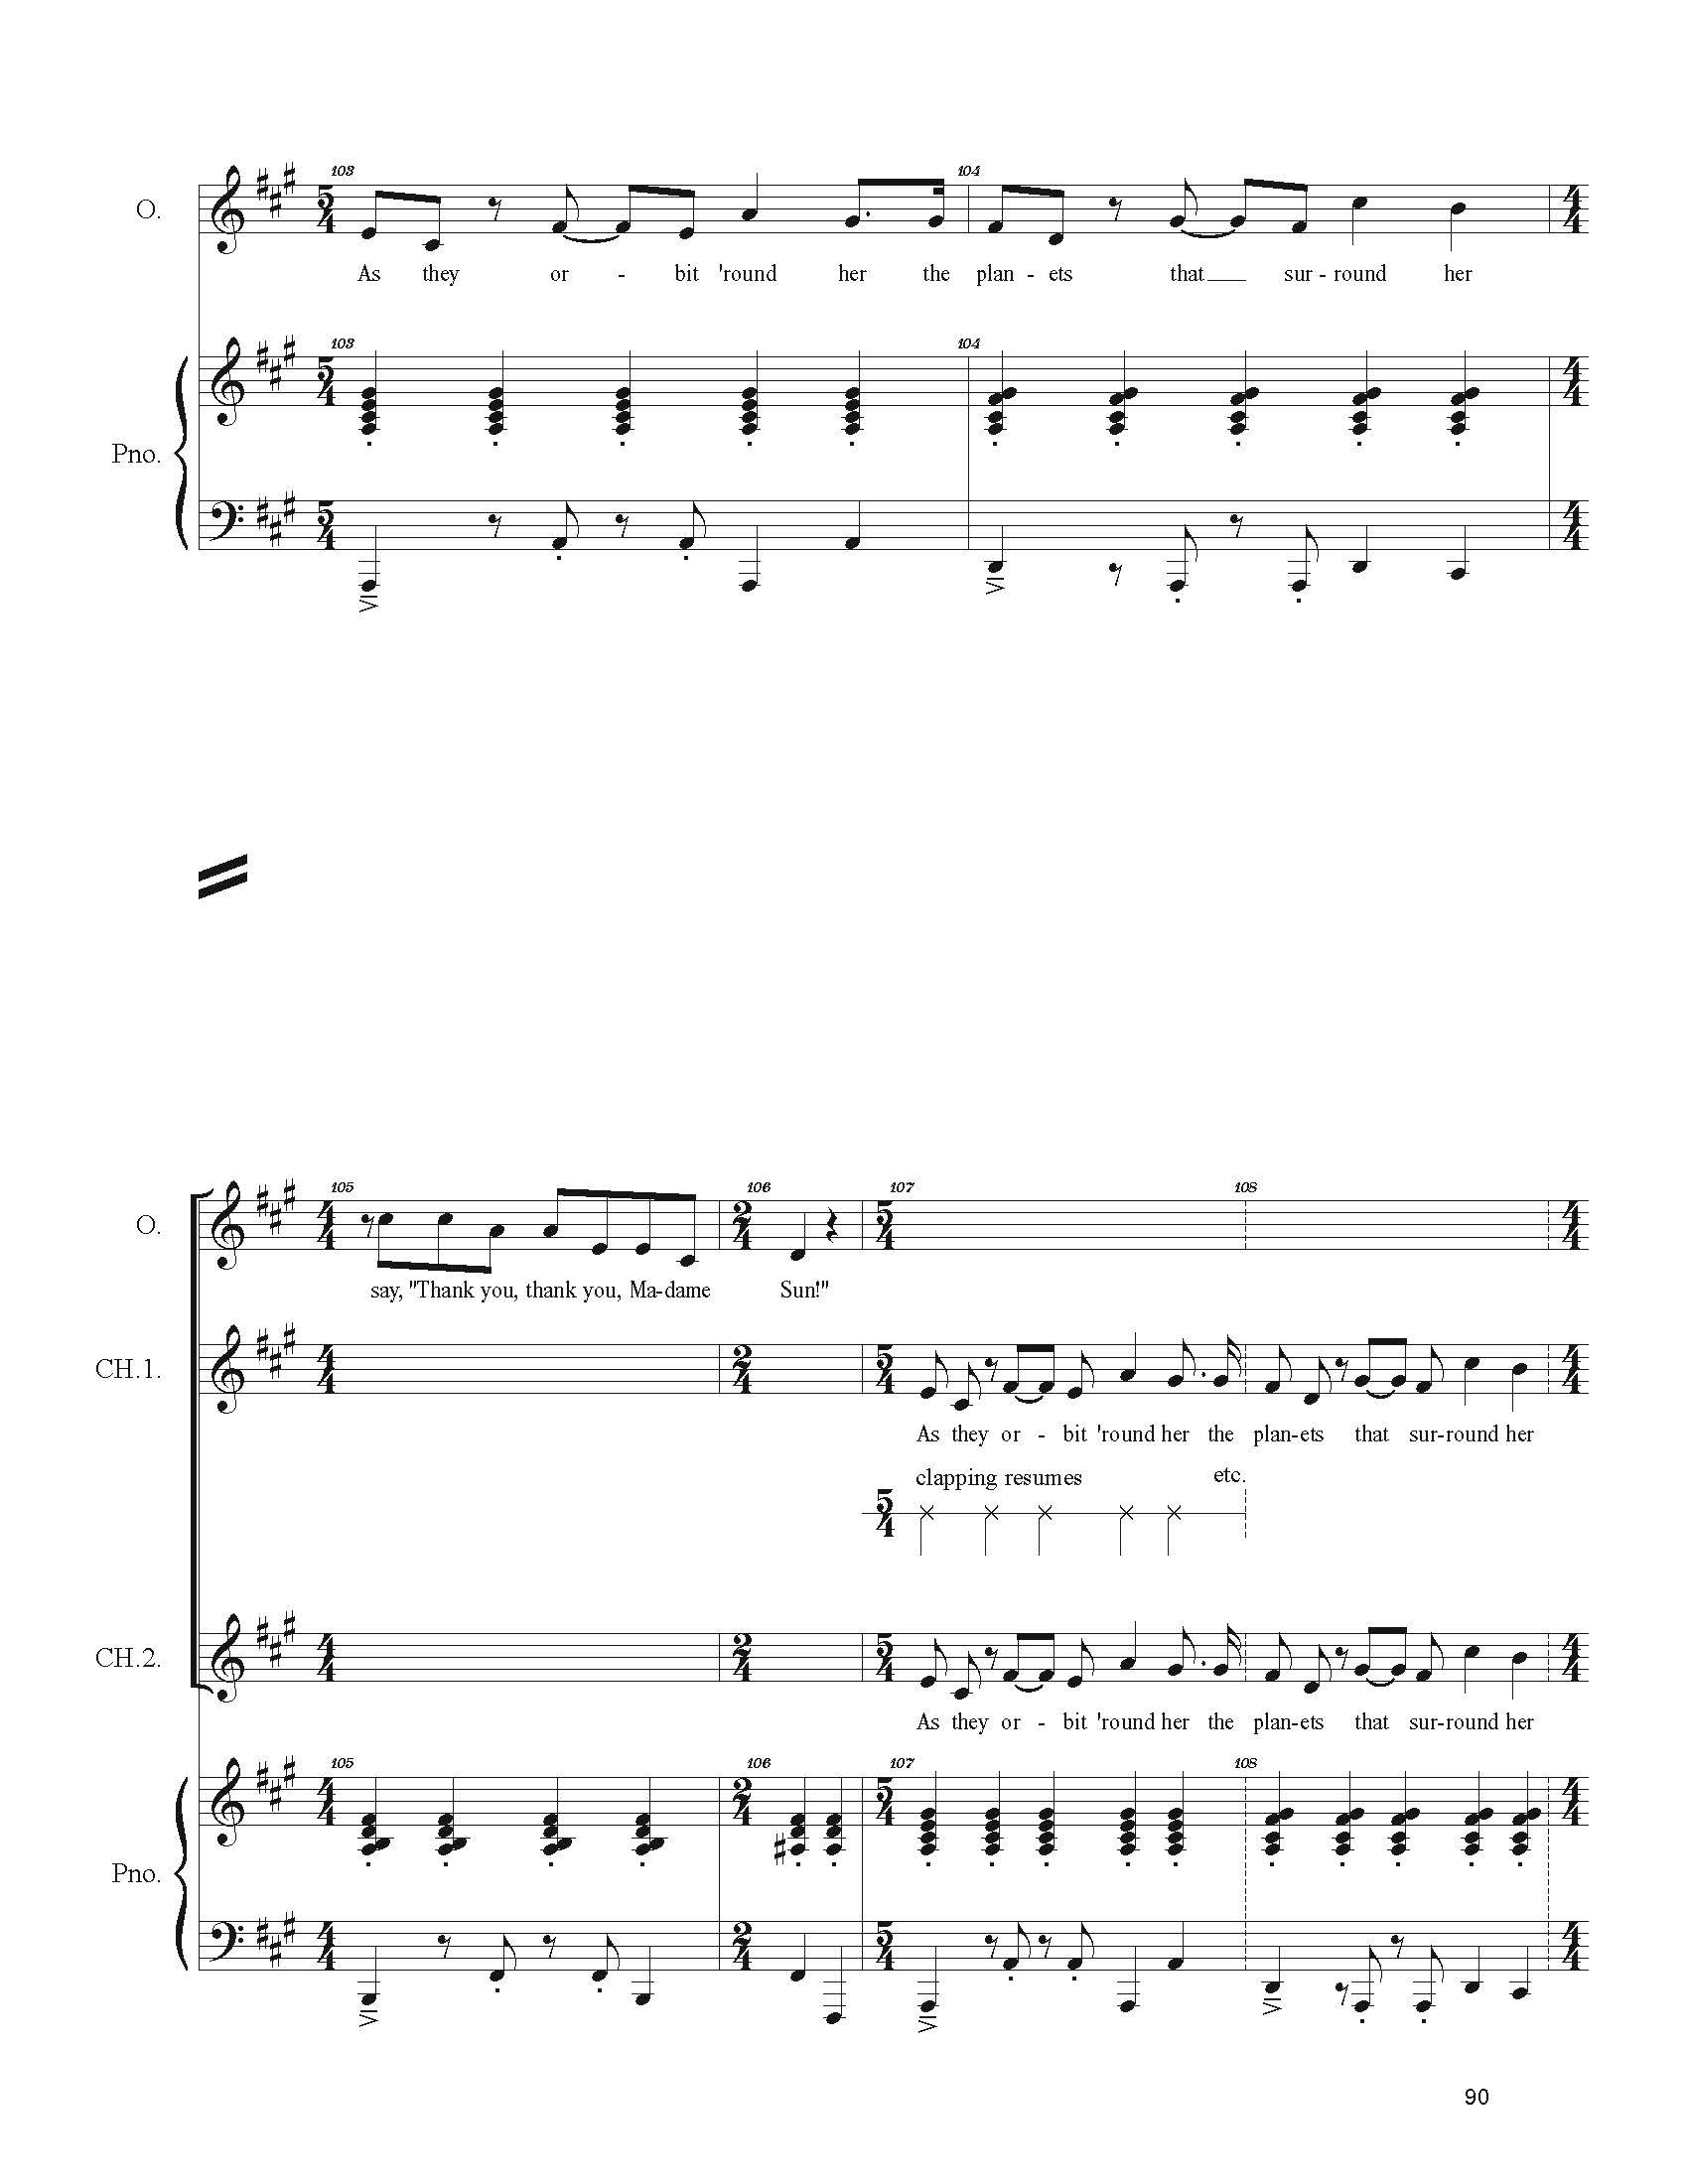 FULL PIANO VOCAL SCORE DRAFT 1 - Score_Page_090.jpg